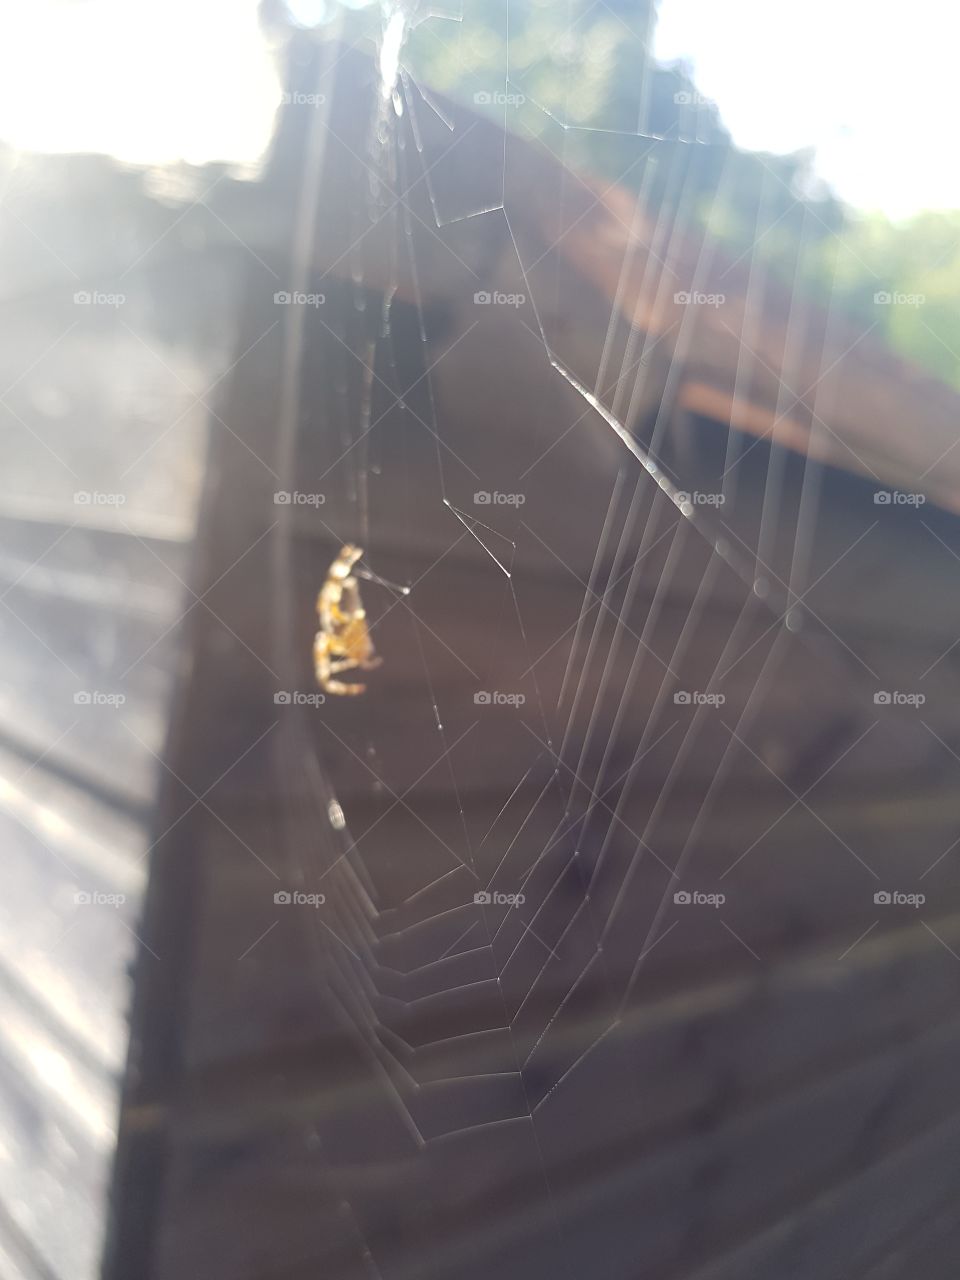 Spider building web